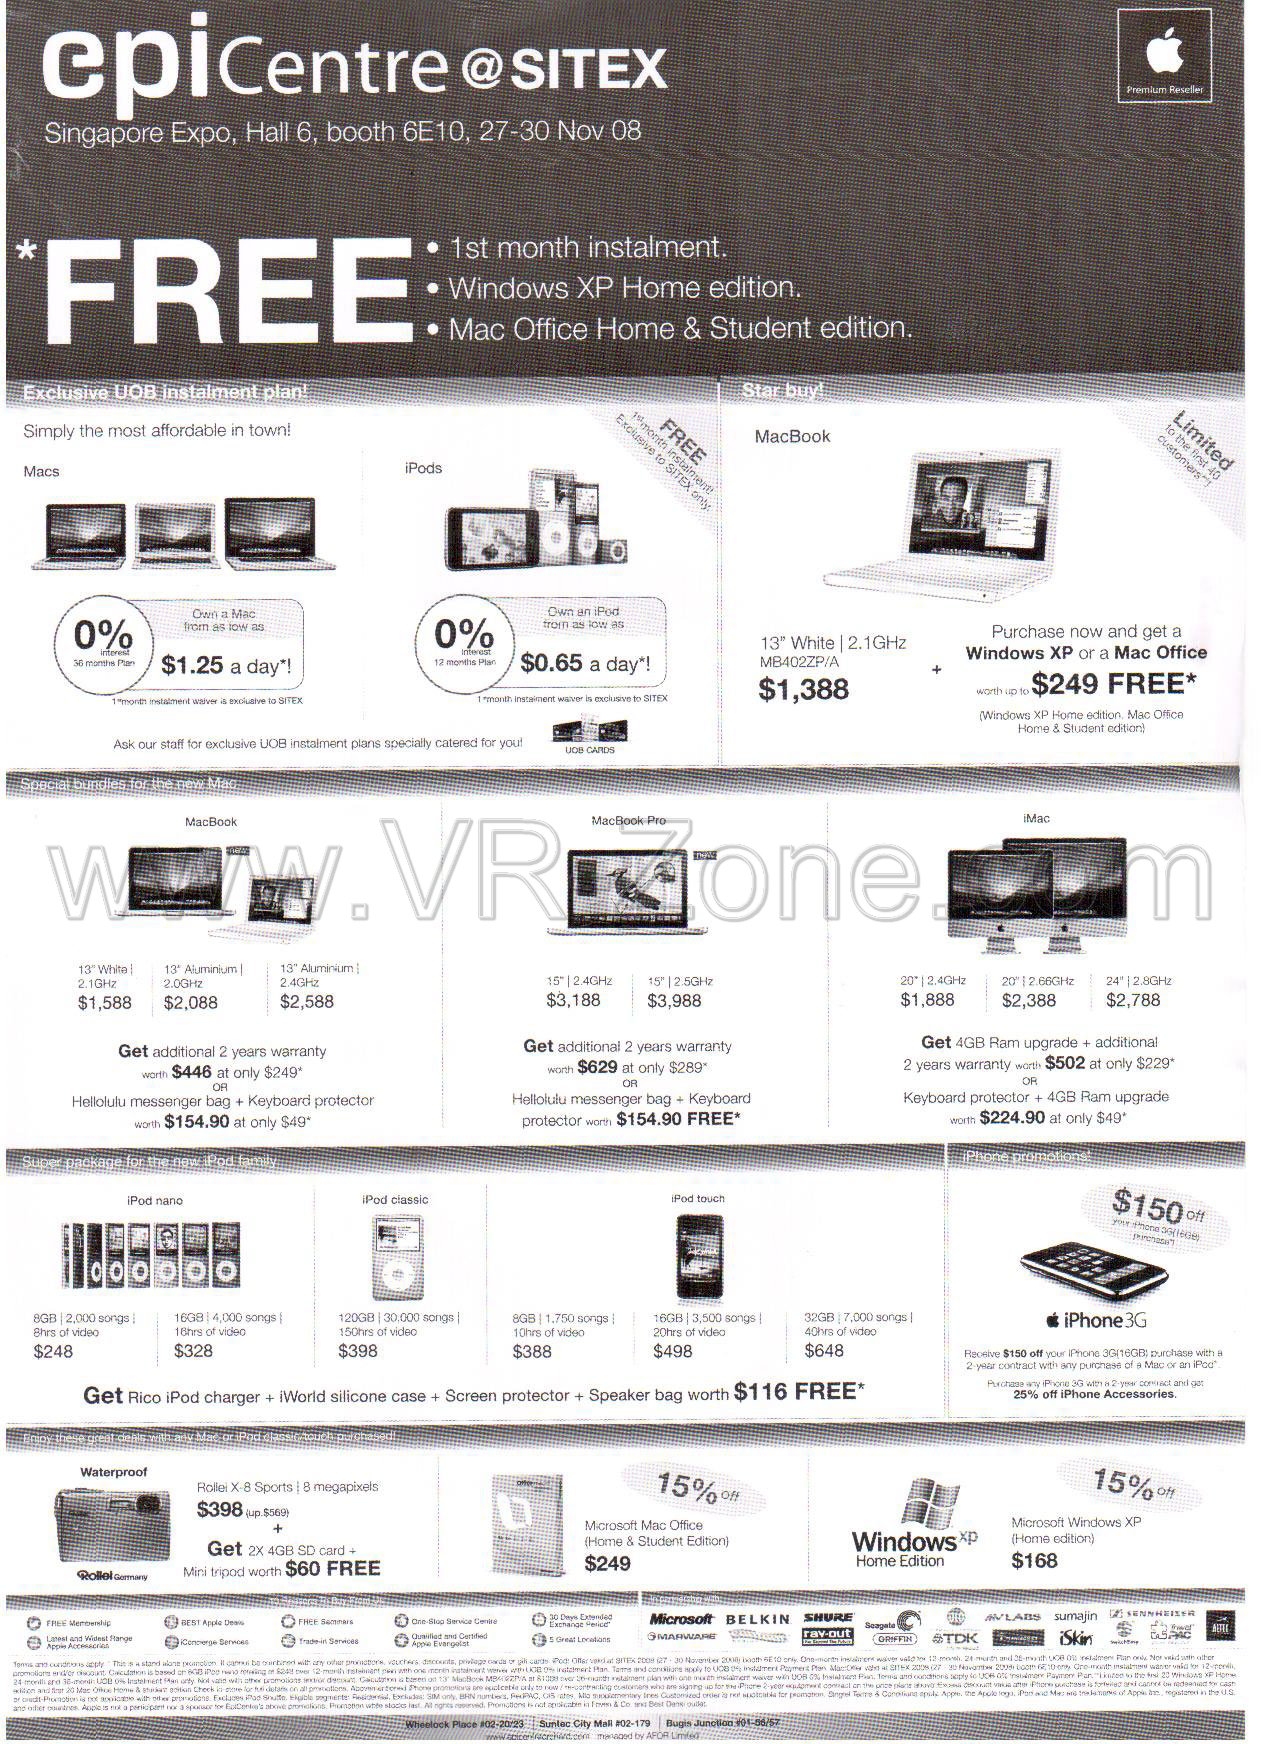 Sitex 2008 price list image brochure of Apple Epi